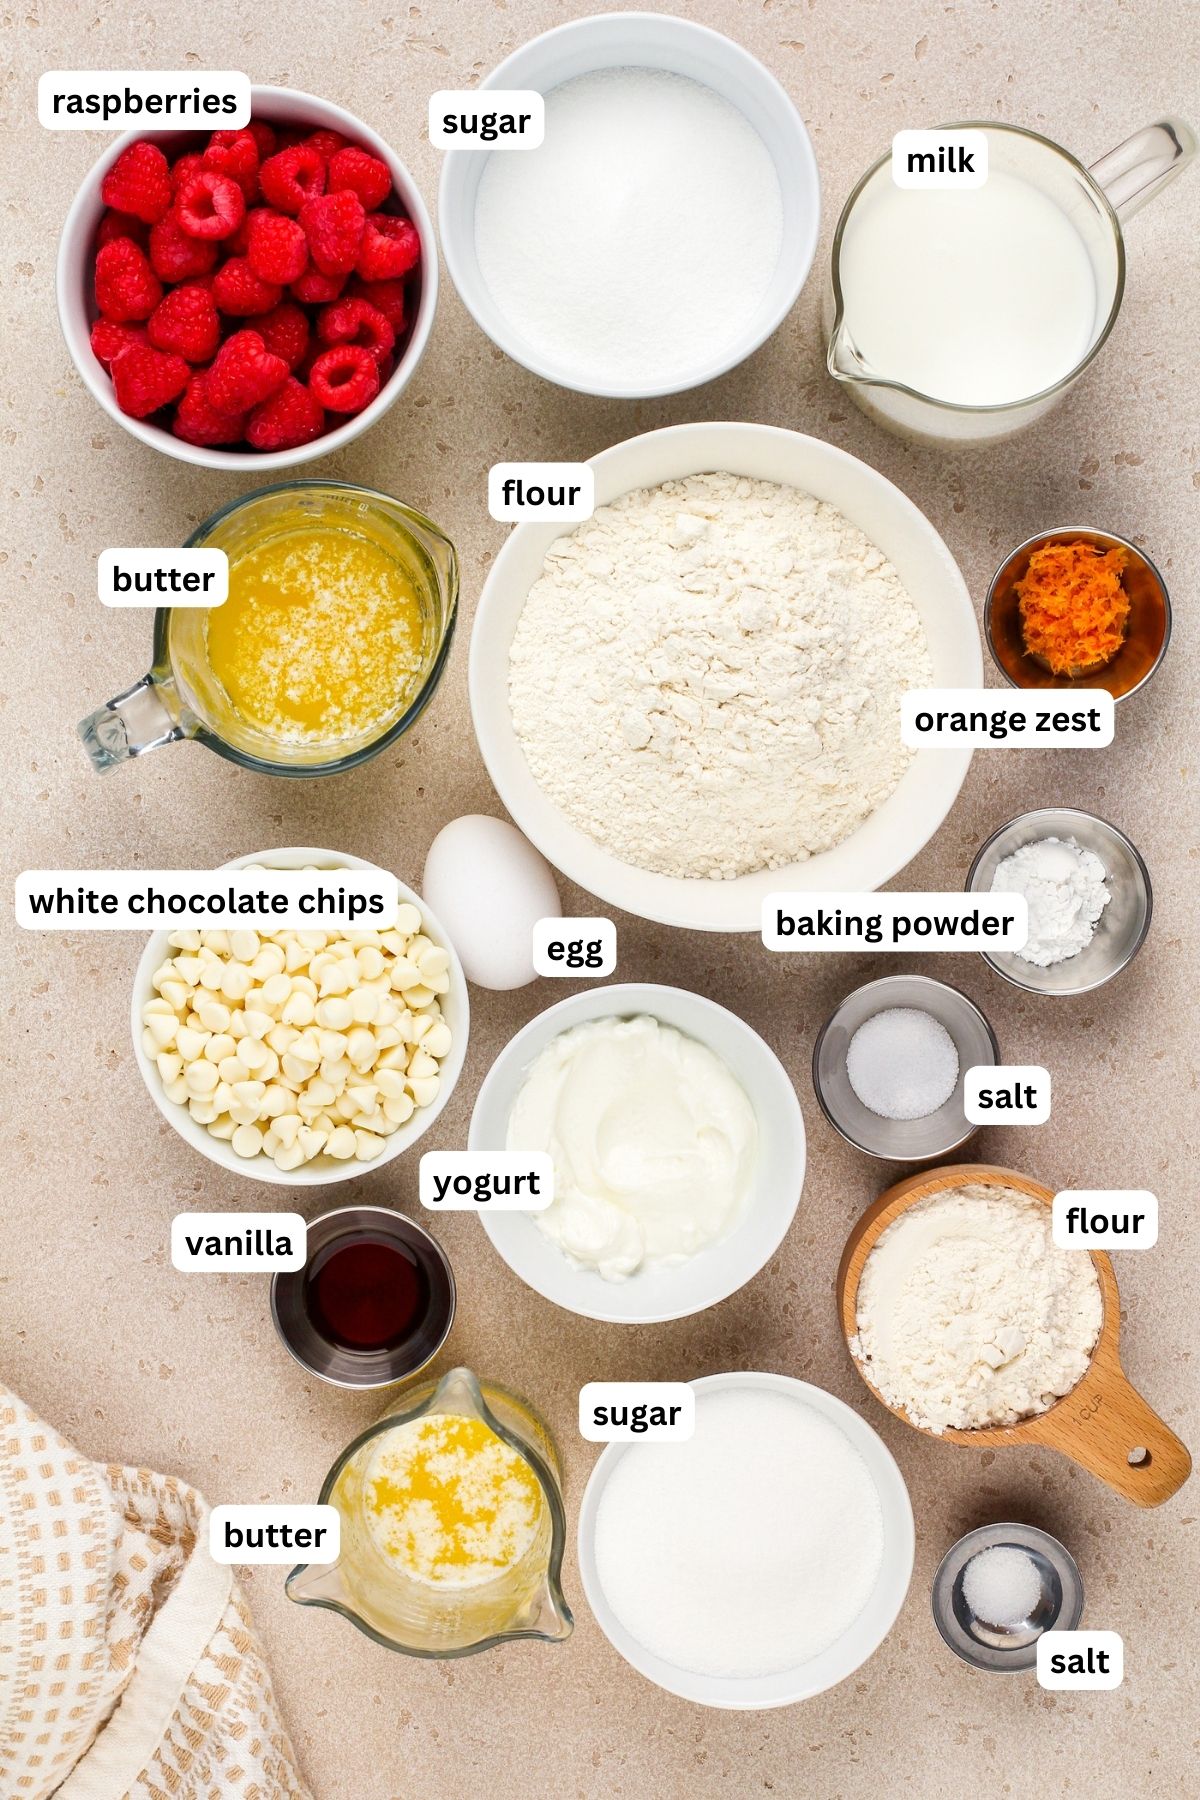 Raspberry muffin recipe ingredients arranged in bowls, from top to bottom: raspberries, granulated sugar, milk, butter, flour, orange zest, white chocolate chips, egg, baking powder, salt, yogurt, and vanilla extract.